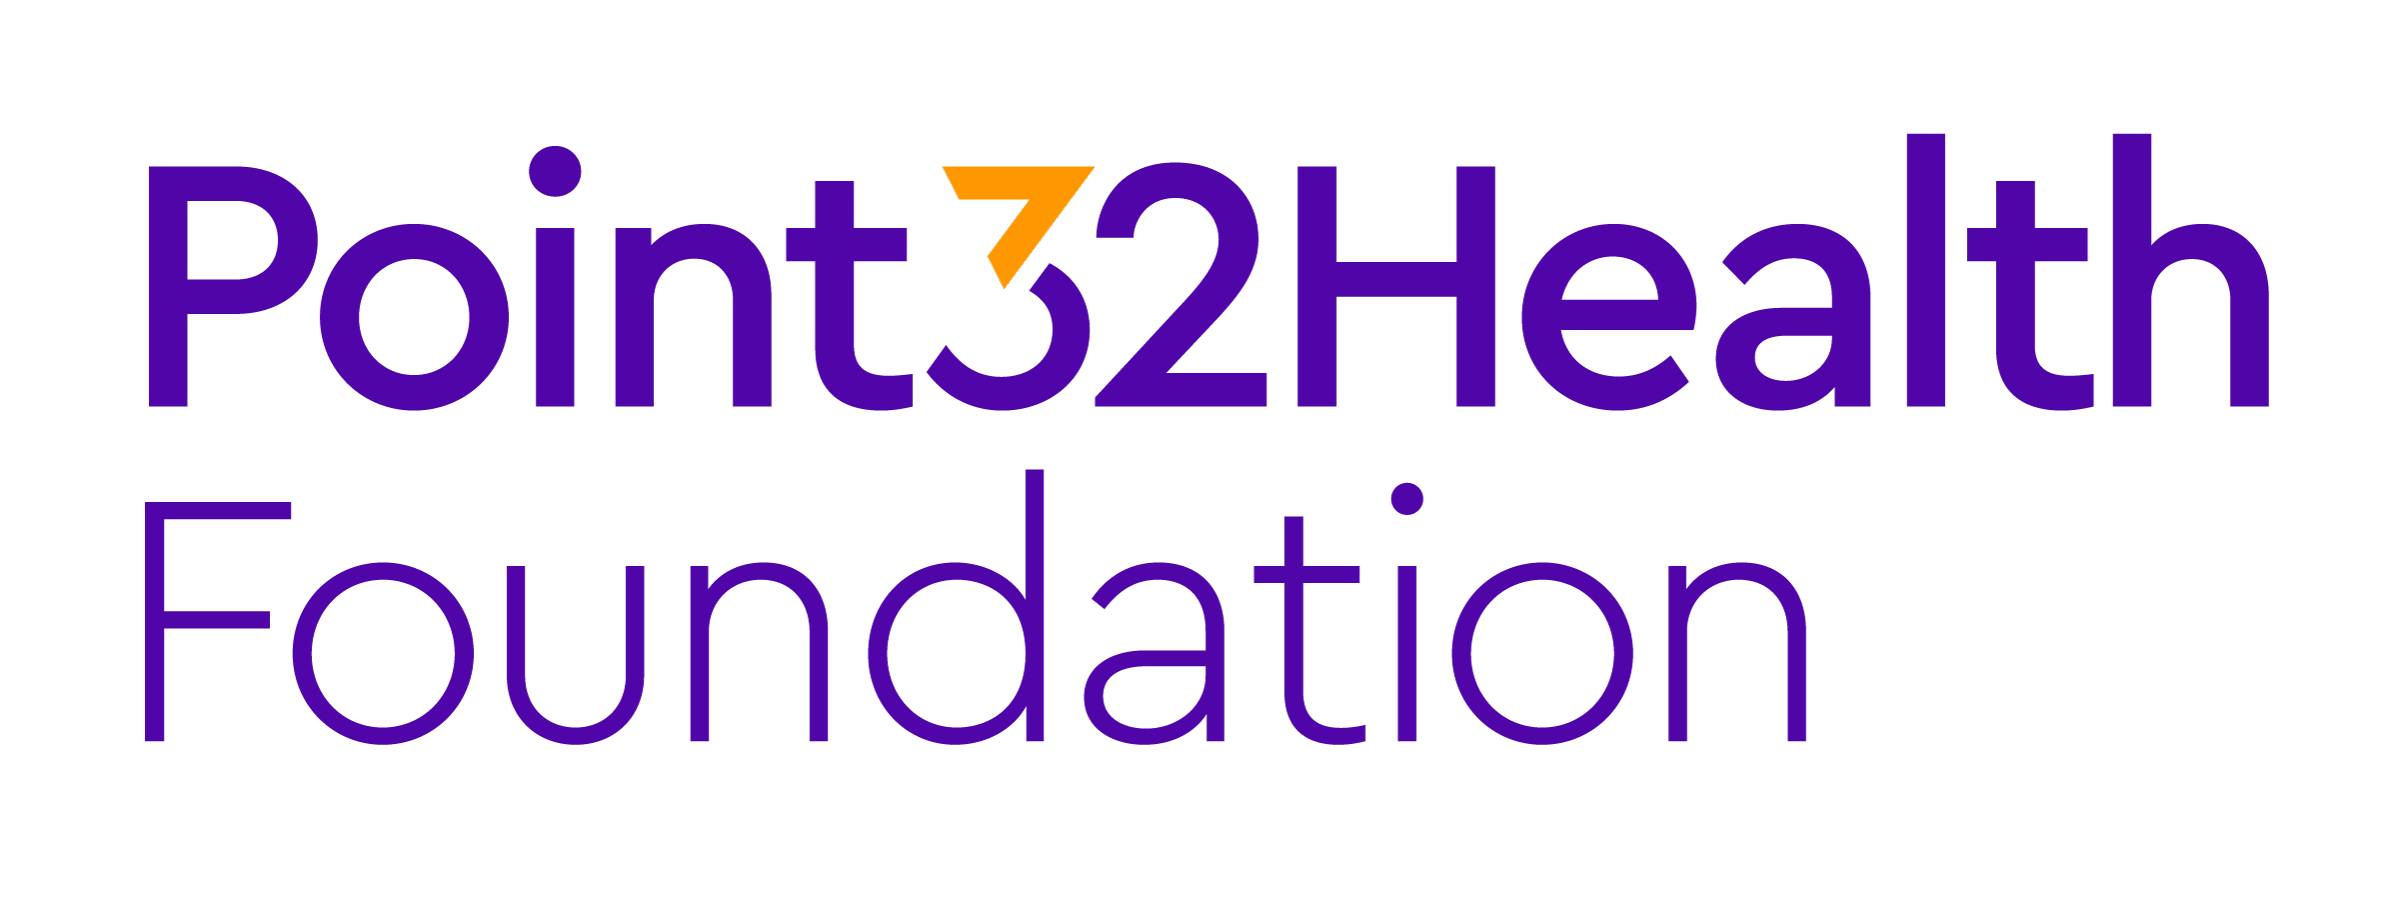 Point32Health Foundation Logo